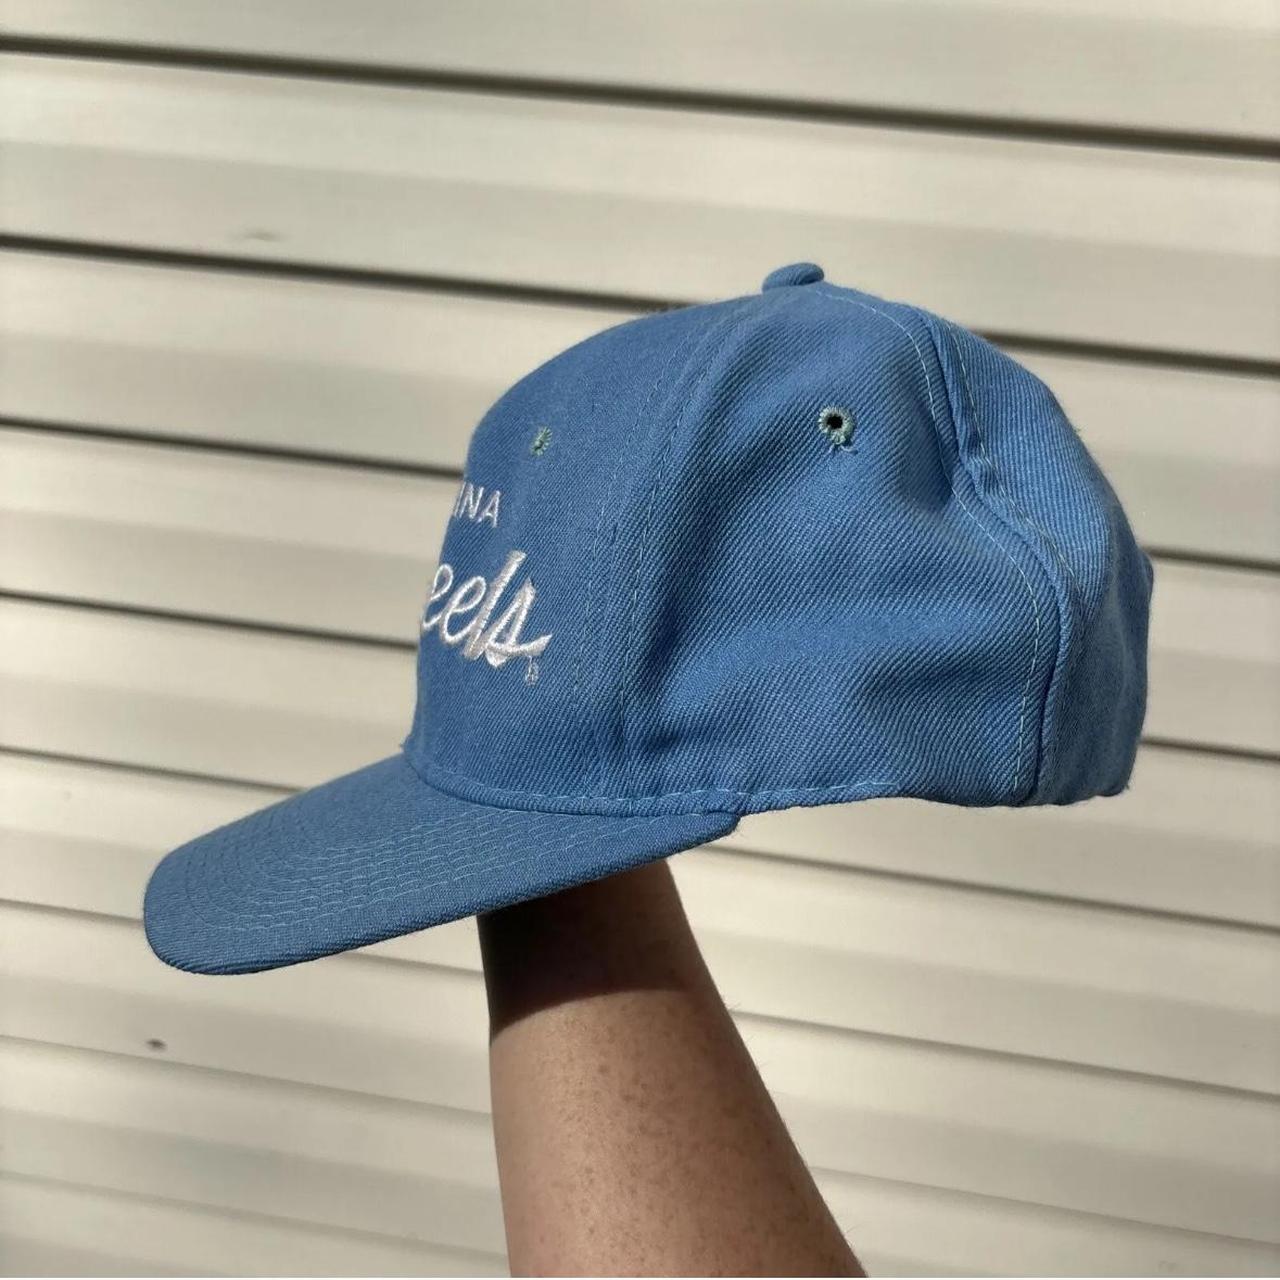 Sports Specialties Men's Blue Hat (8)